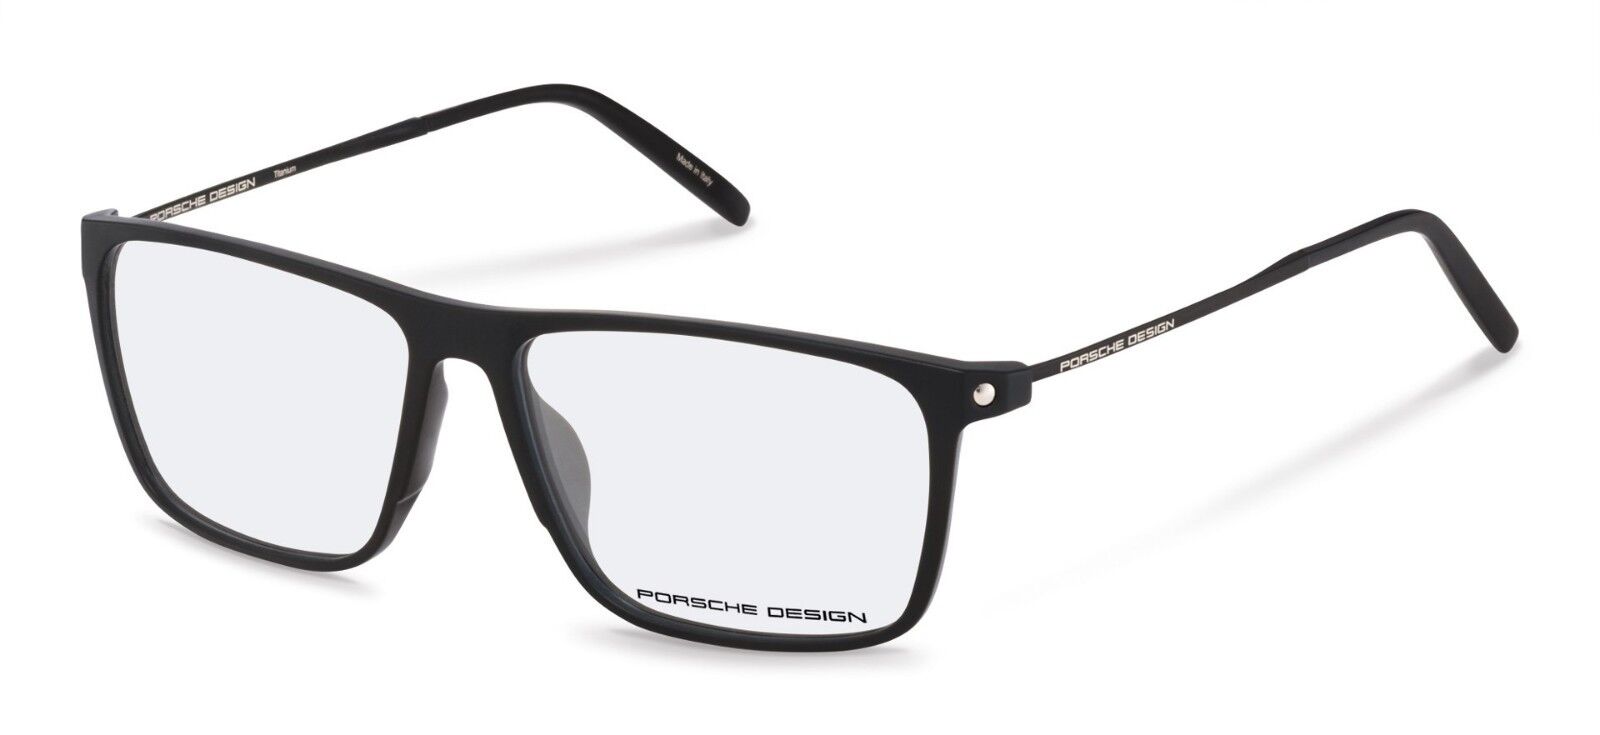 Porsche Design P 8334 A Black Eyeglasses